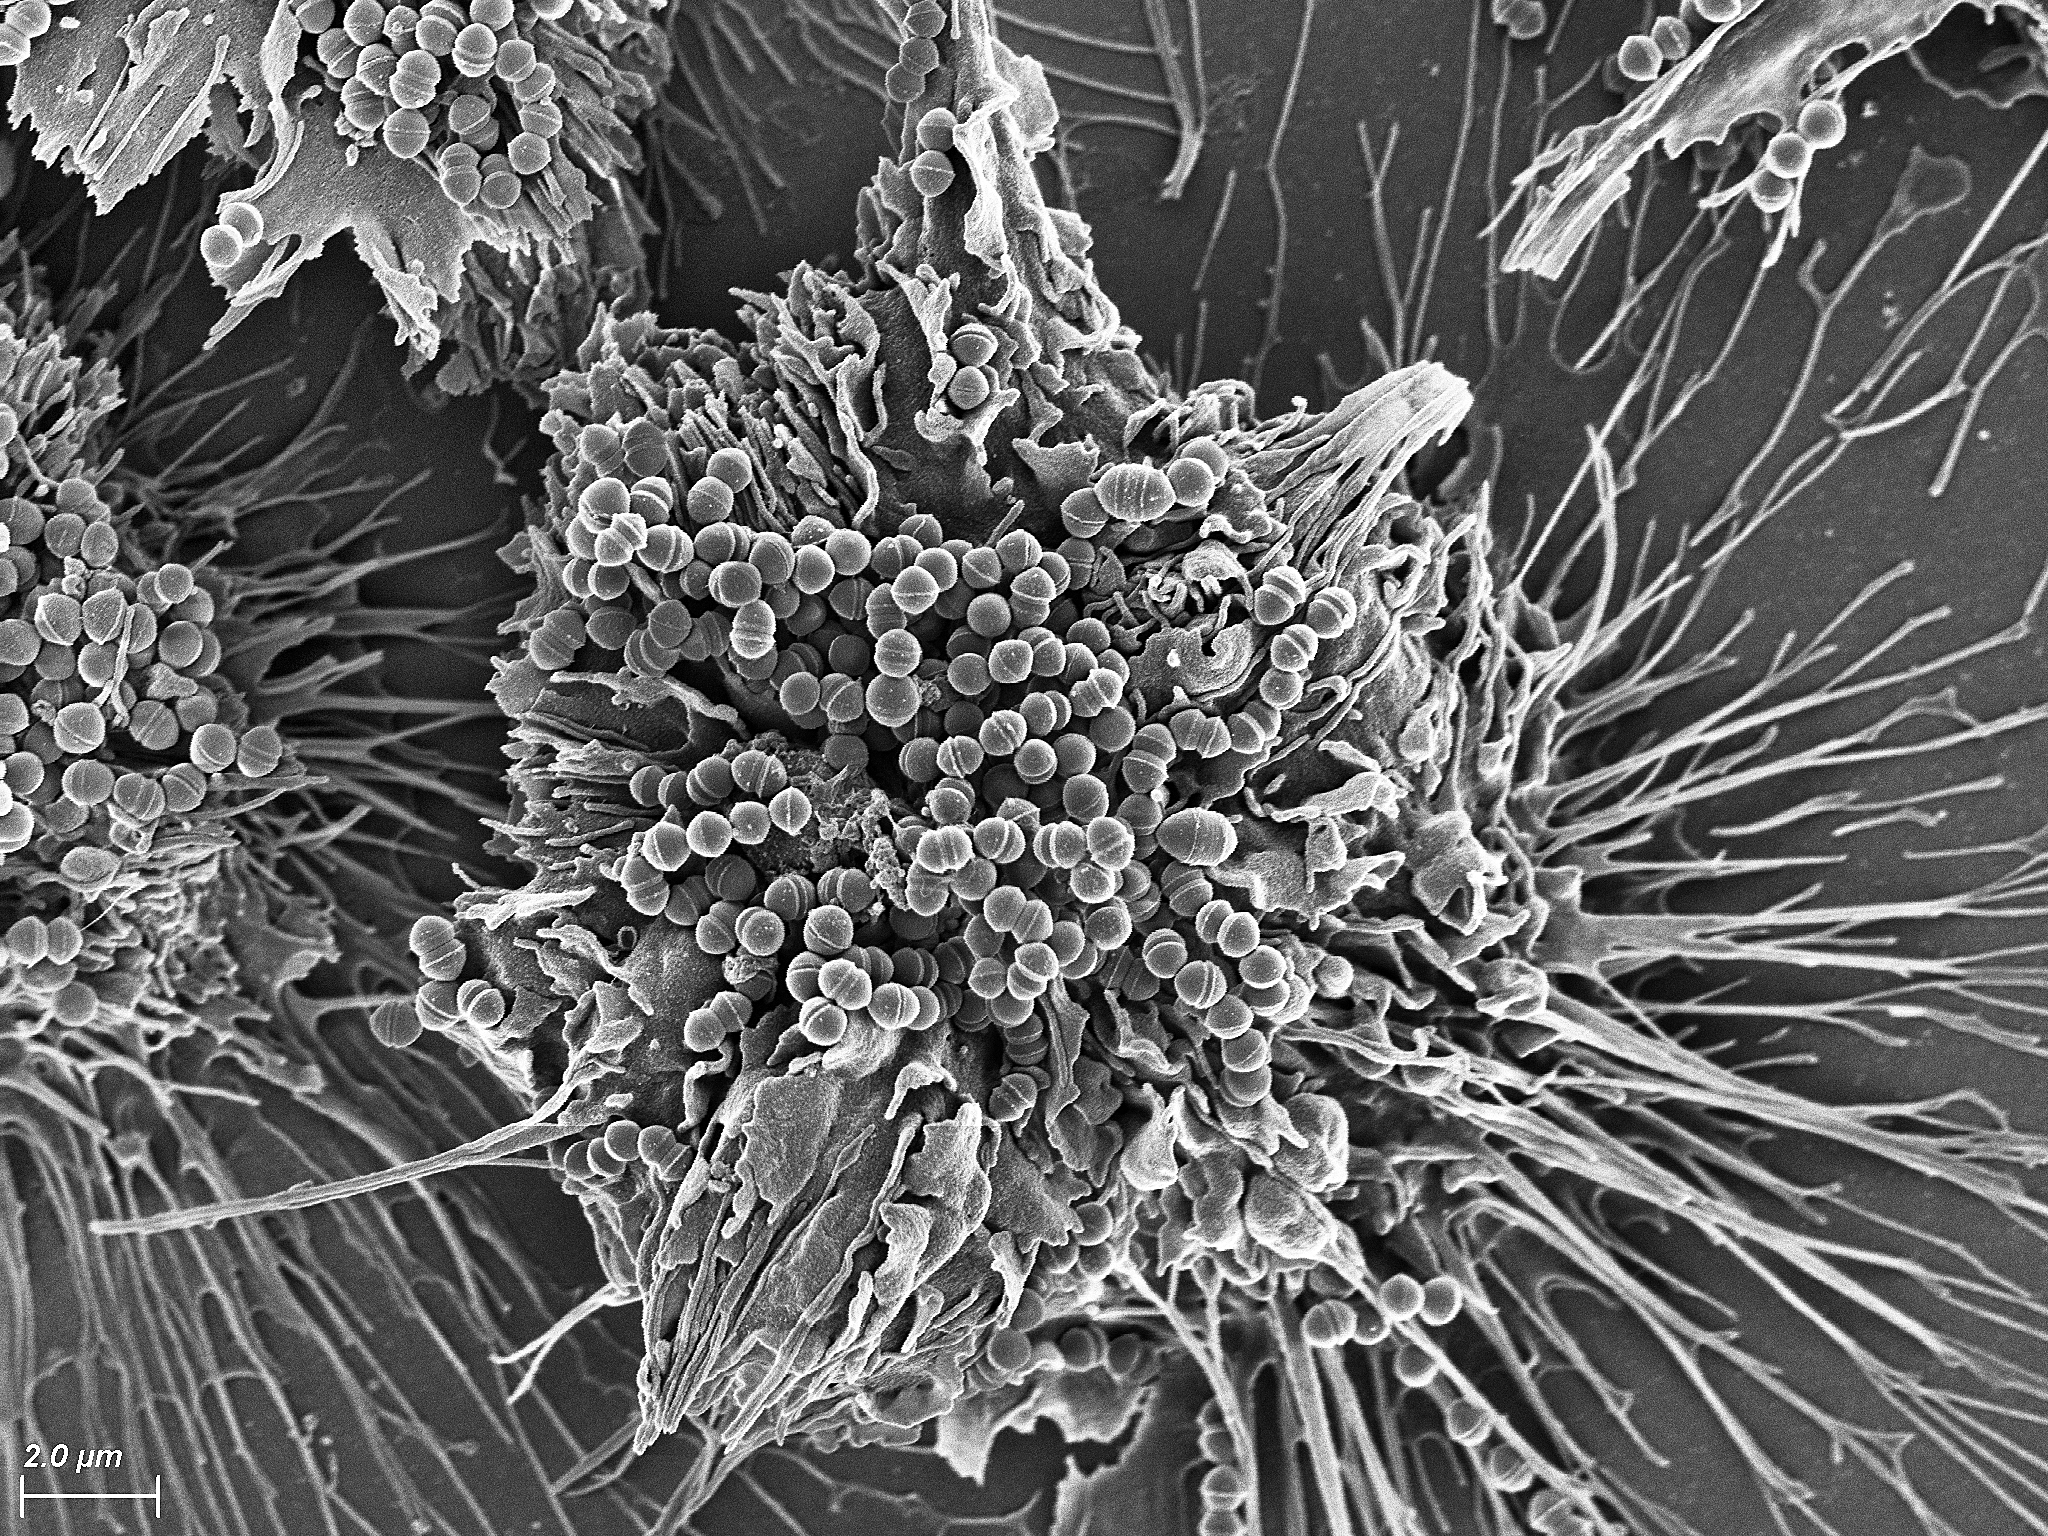 A modern electron micrograph of streptococcus bacteria. 